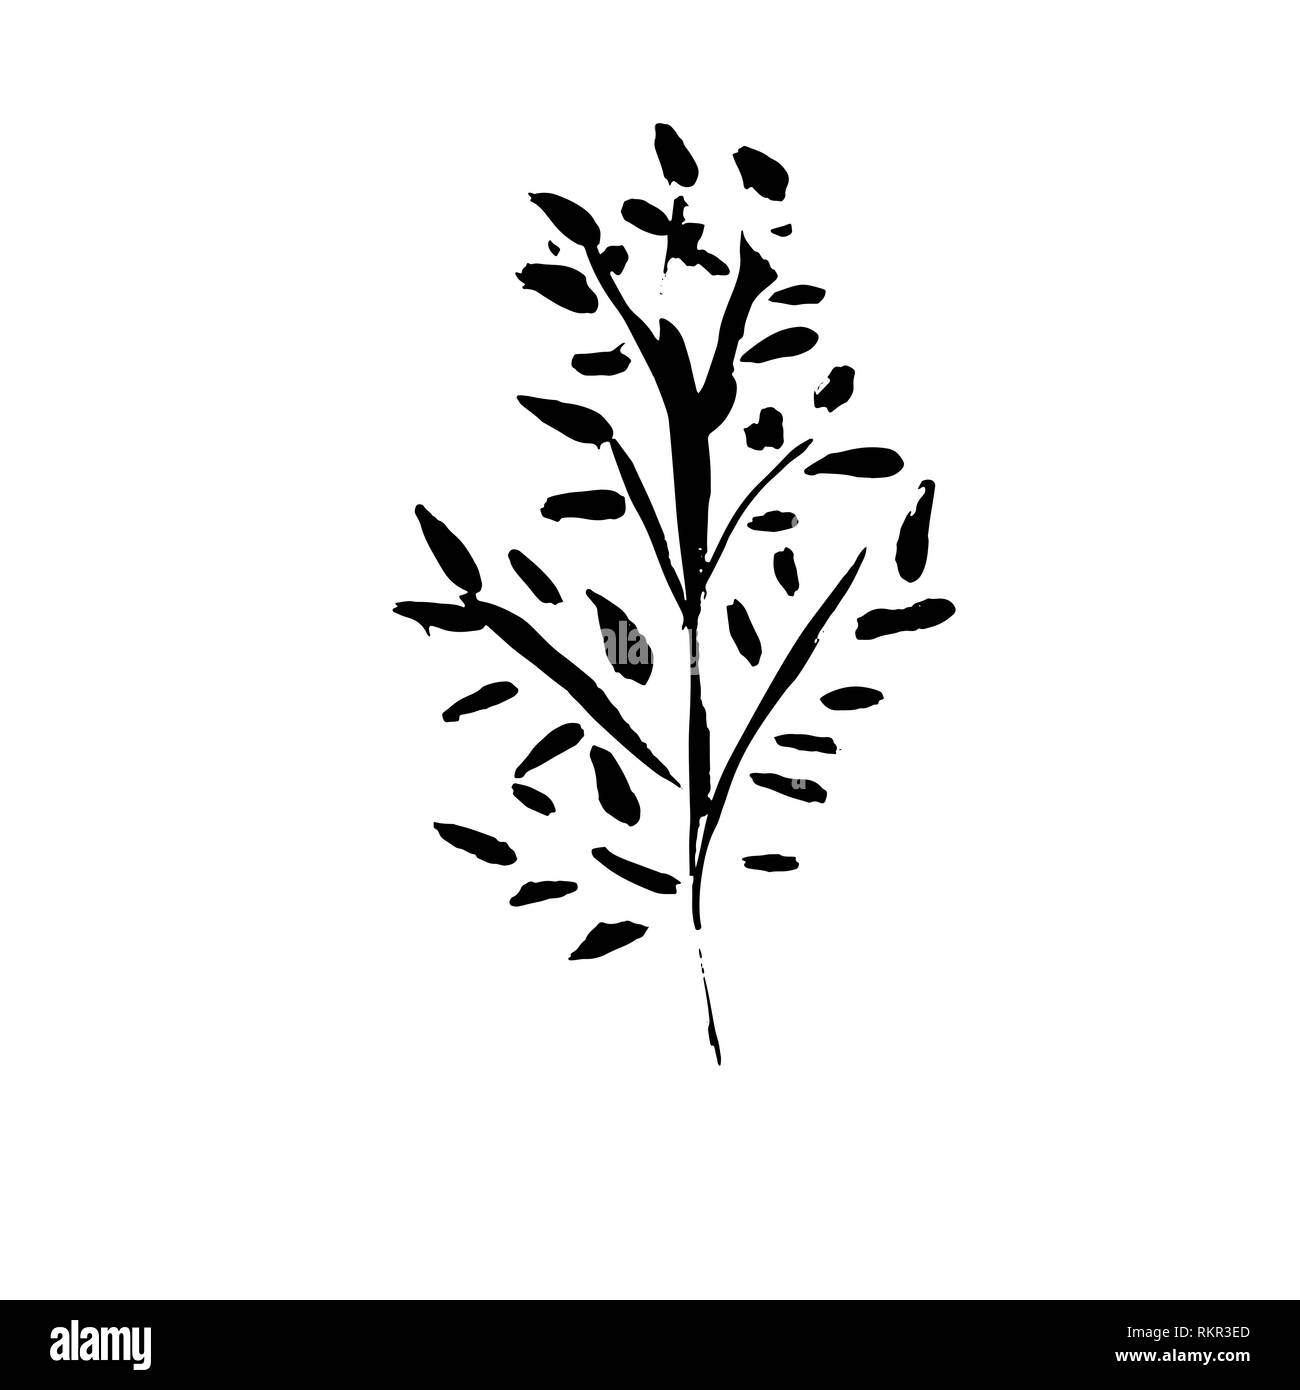 Tree silhouette. Hand drawn vector illustration Stock Vector Image ...